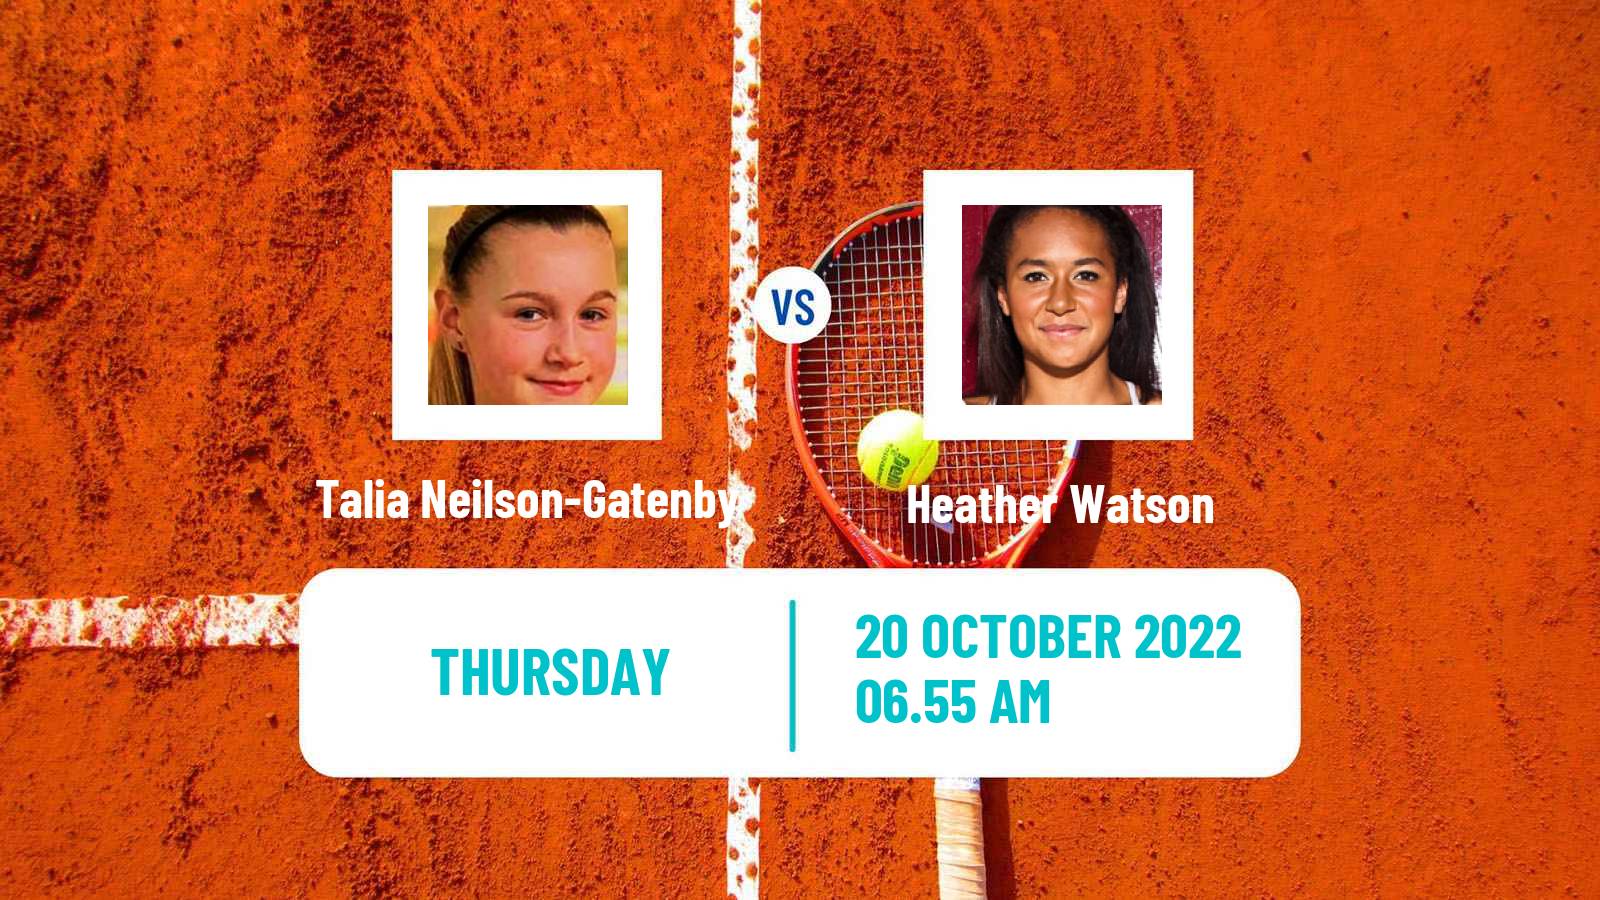 Tennis ITF Tournaments Talia Neilson-Gatenby - Heather Watson